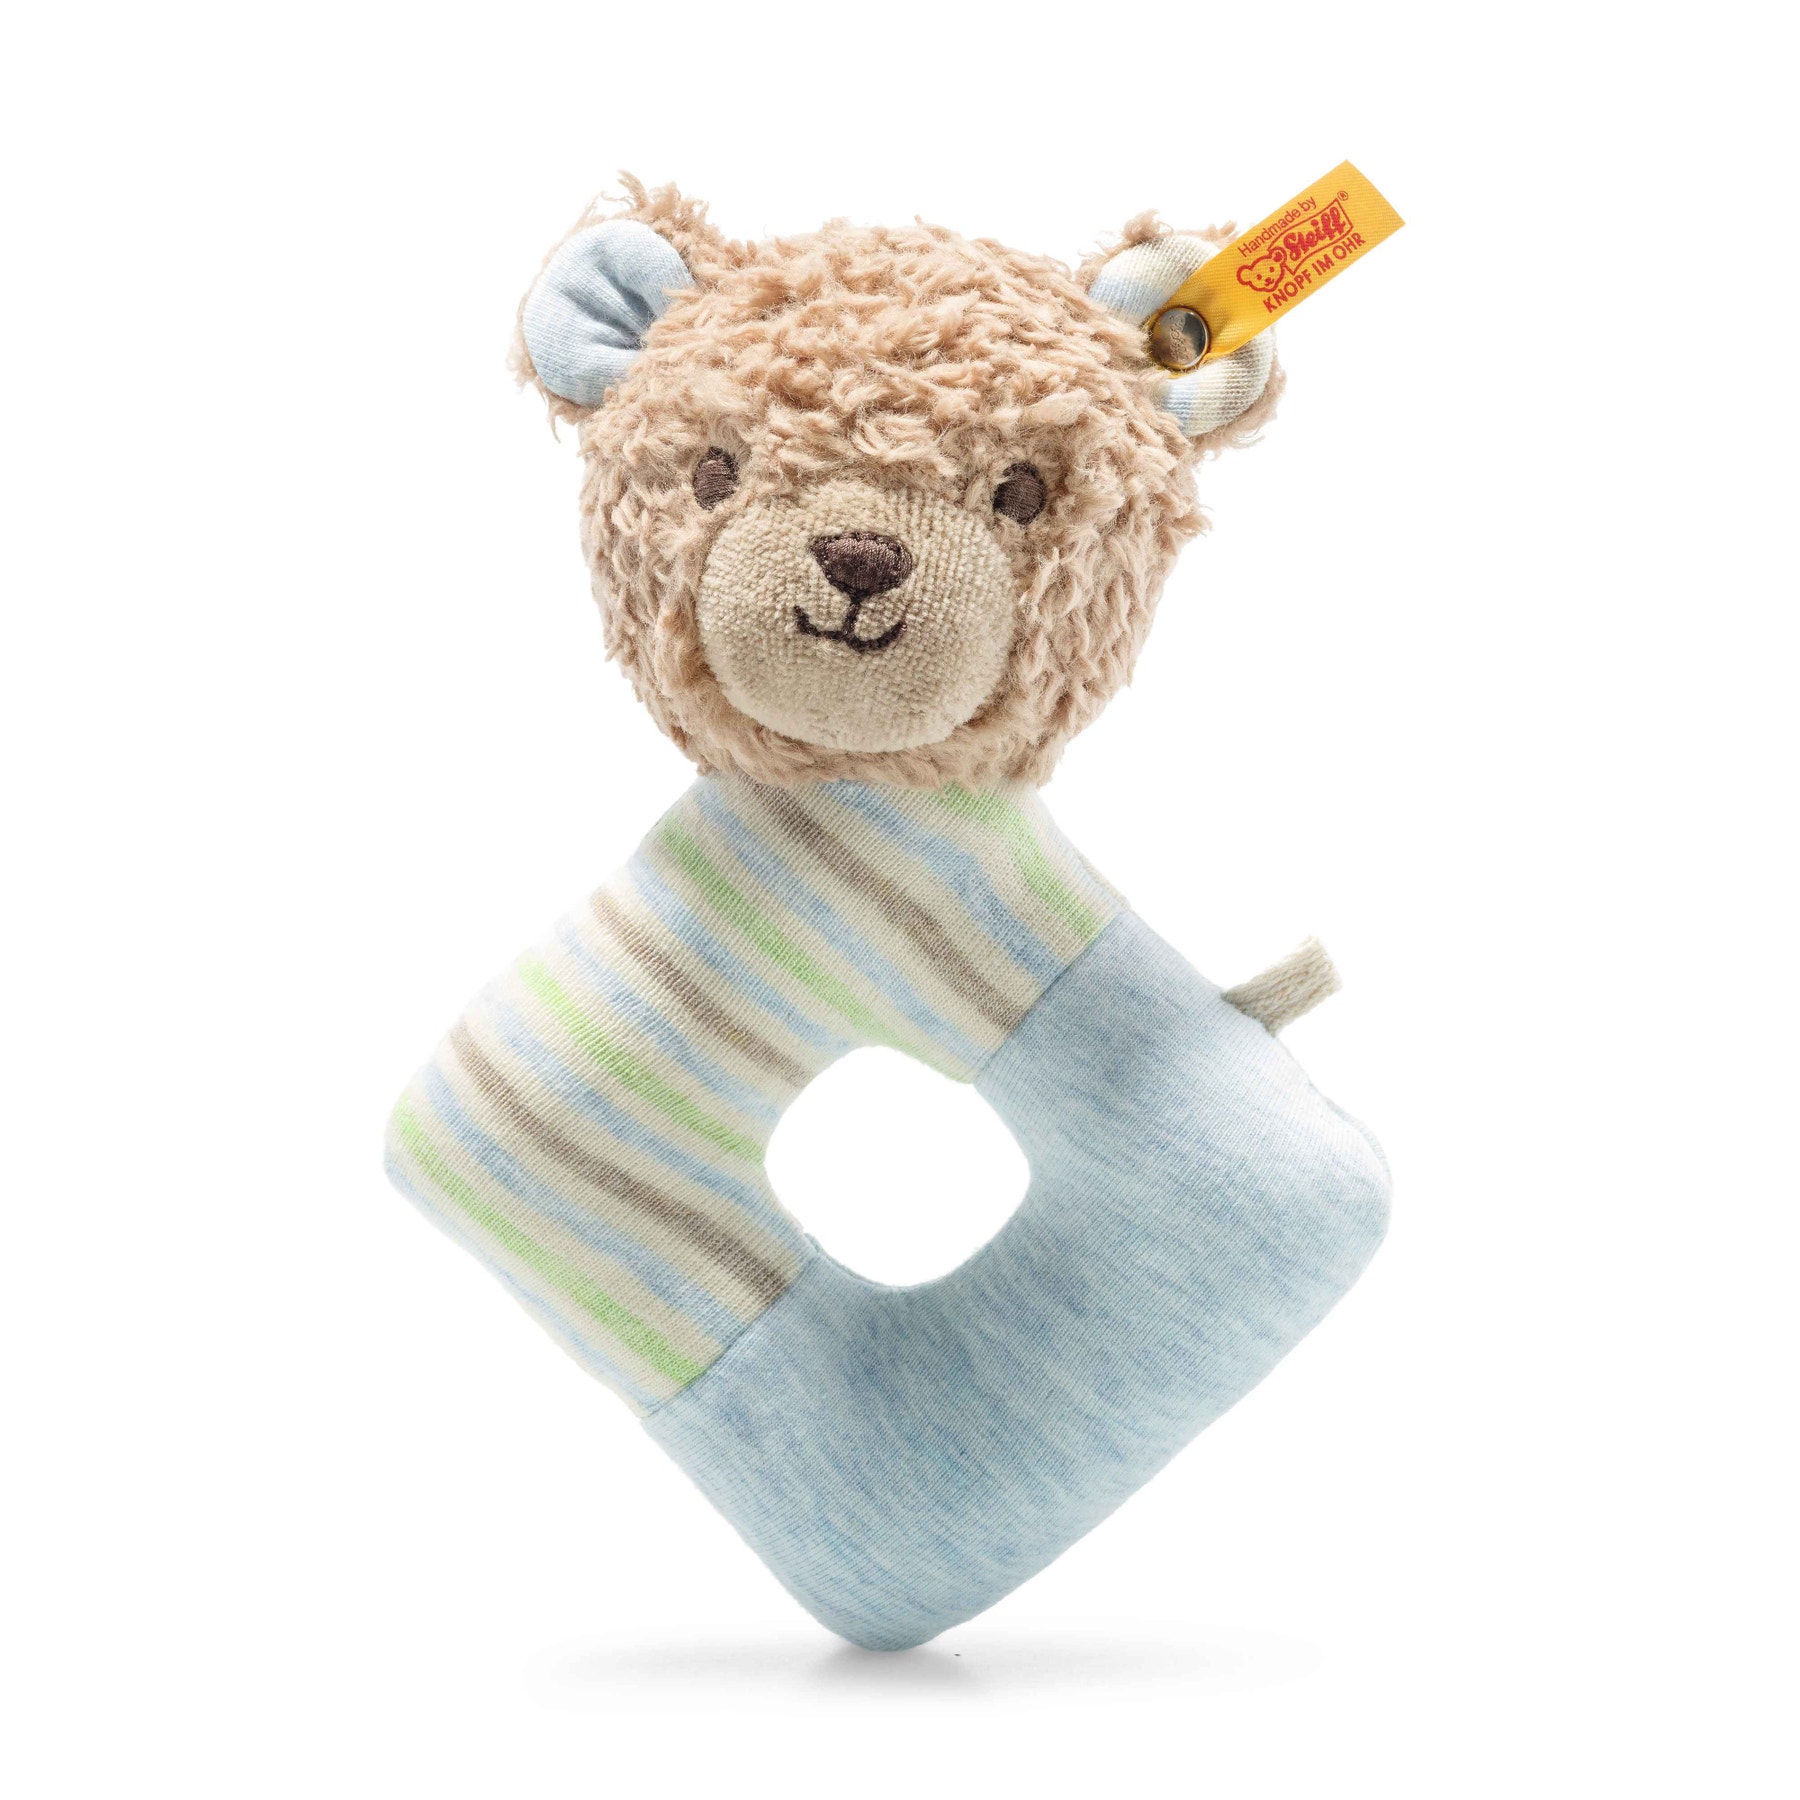 GOTS Rudy Teddy bear grip toy with rattle